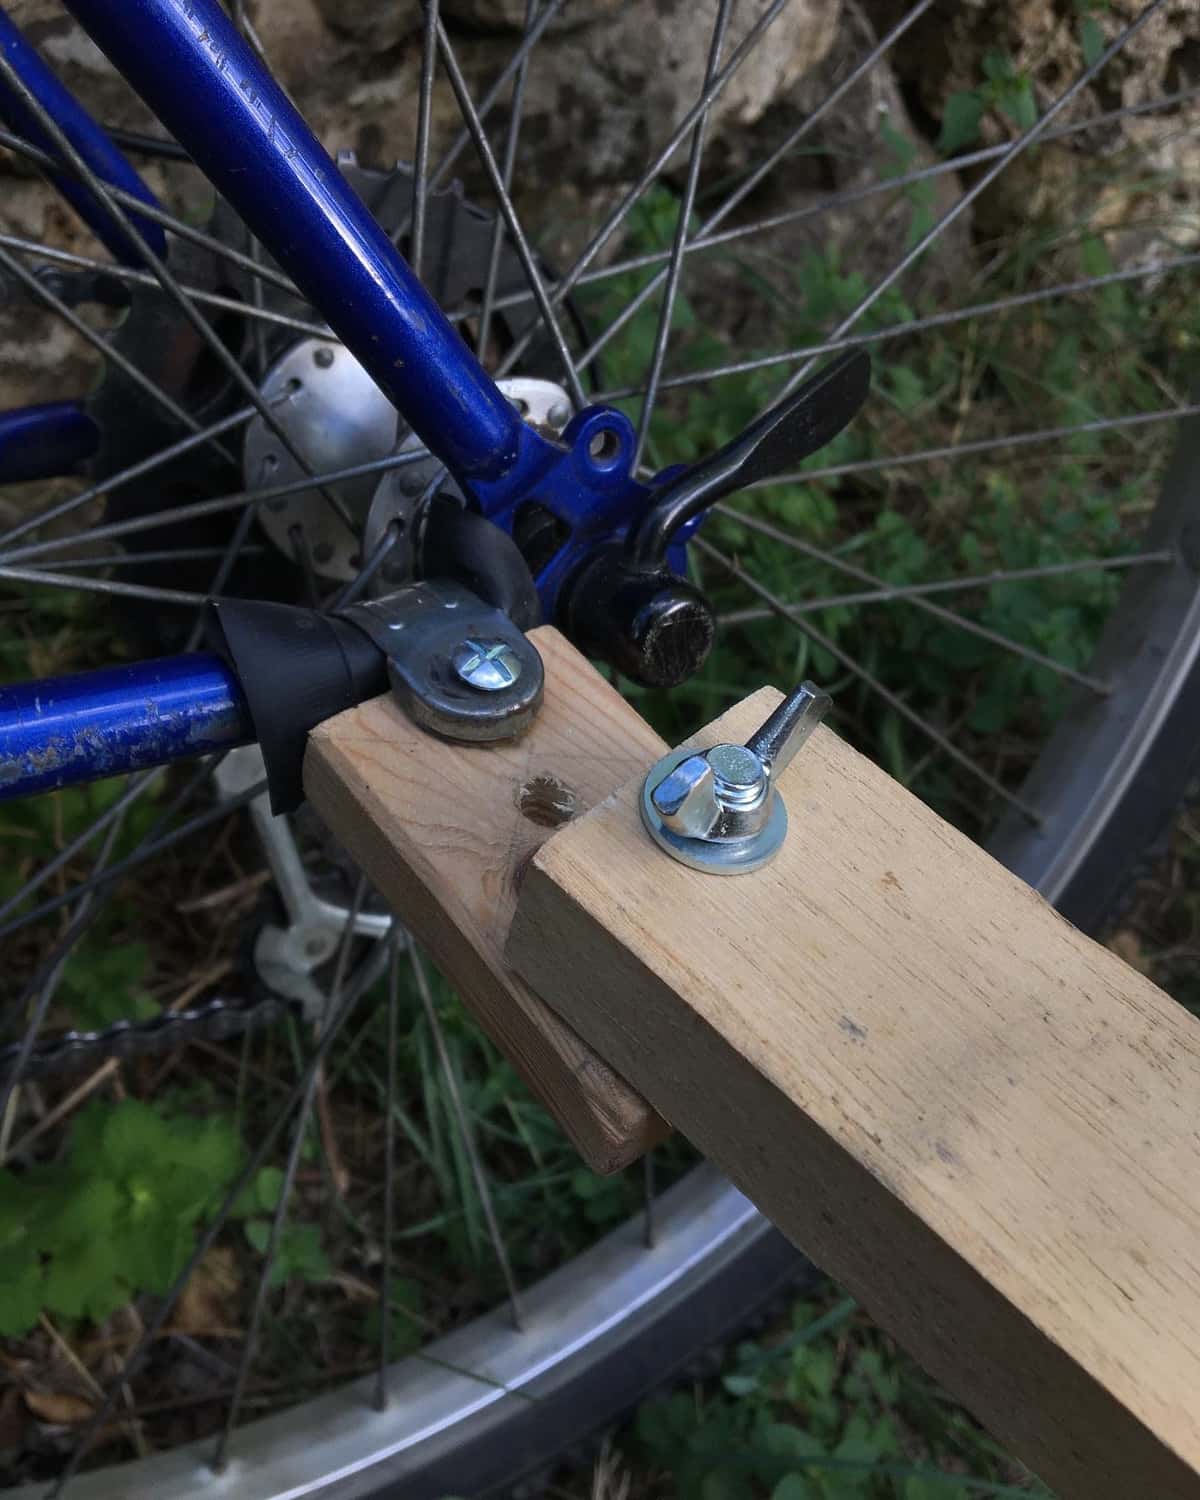 Attachment piece to the bike wheel.  